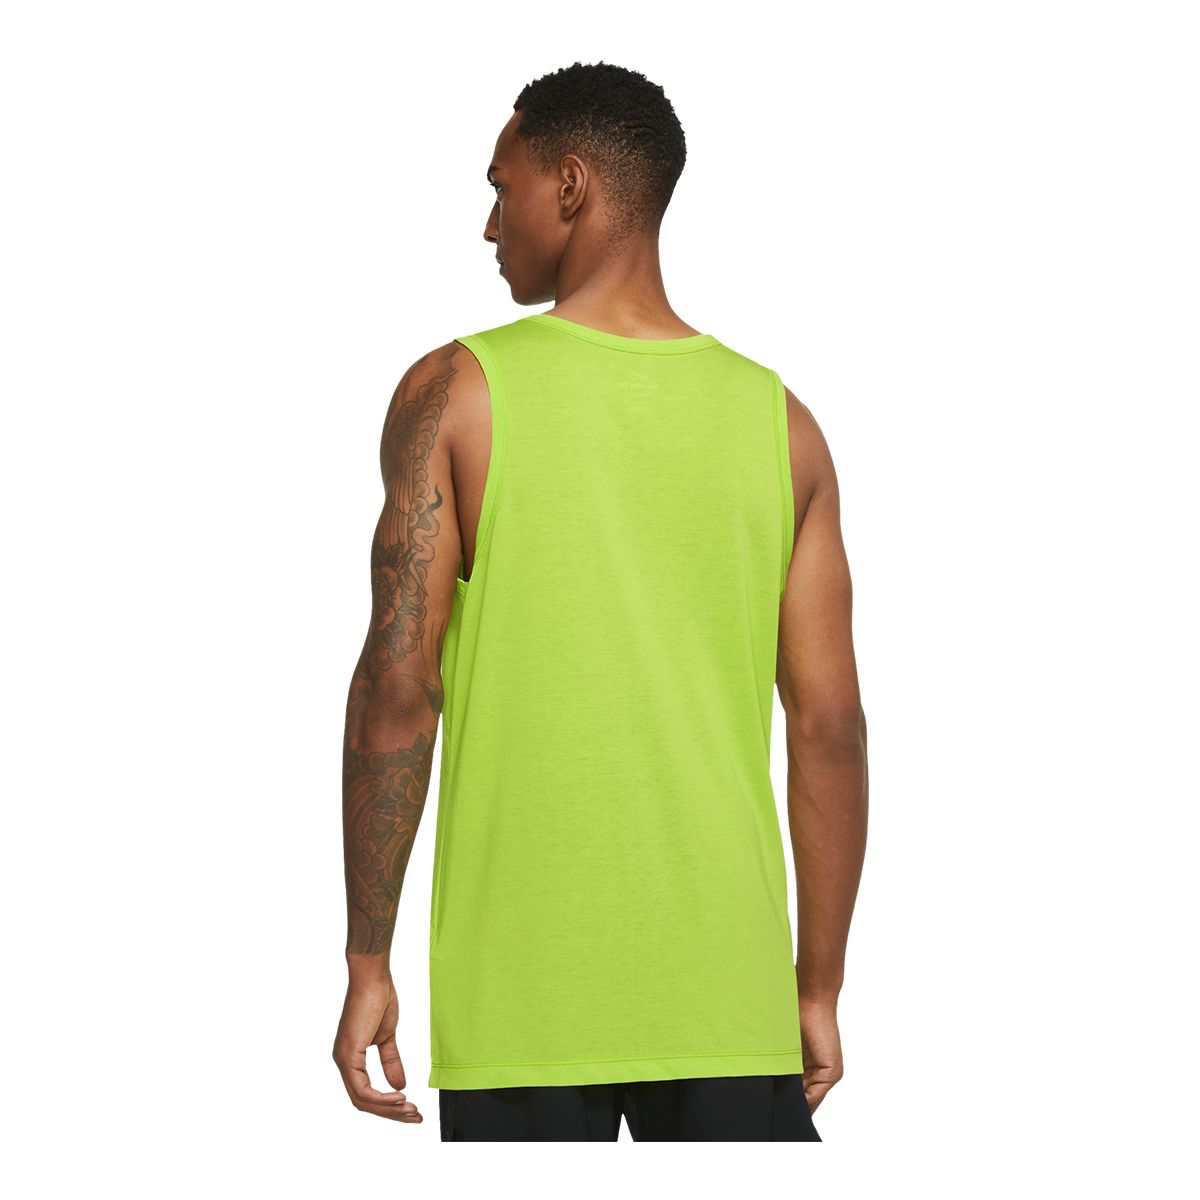 Nike Men's Dri-FIT Story Pack Tank Top, Soft, Lightweight, Sleeveless